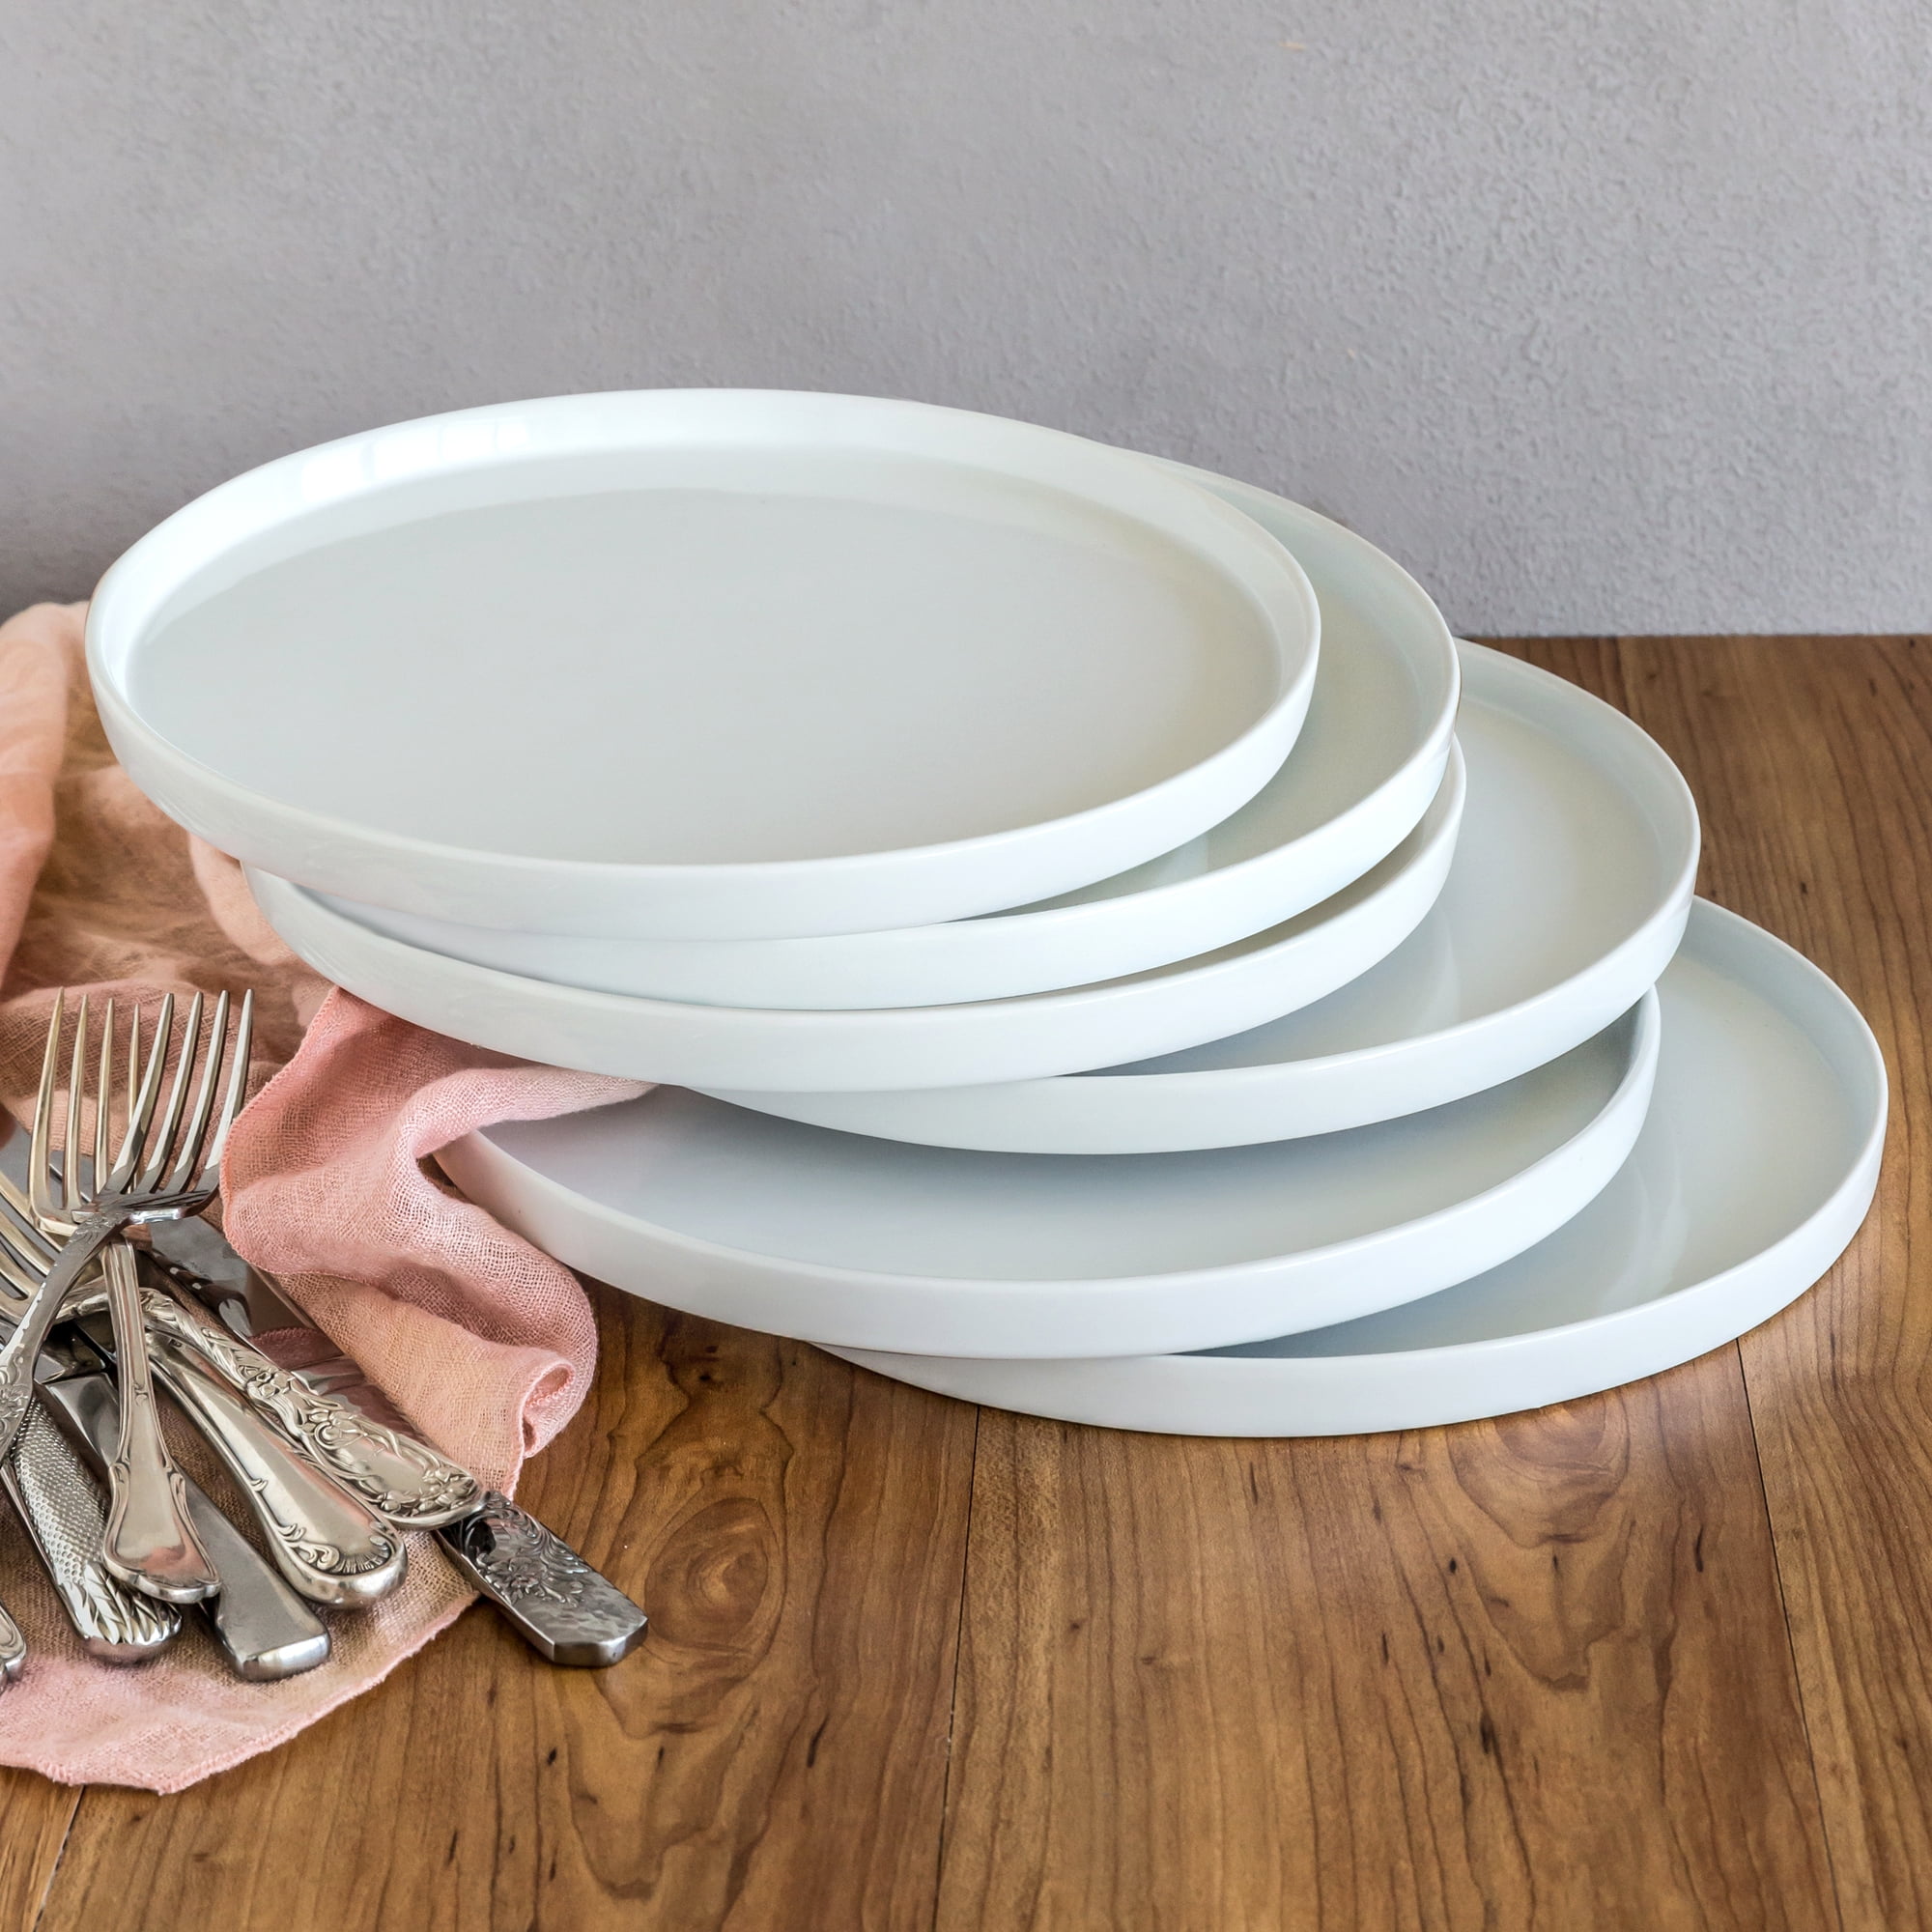 Modern Plate Sets & Modern Plate Sets Medium Image For Modern